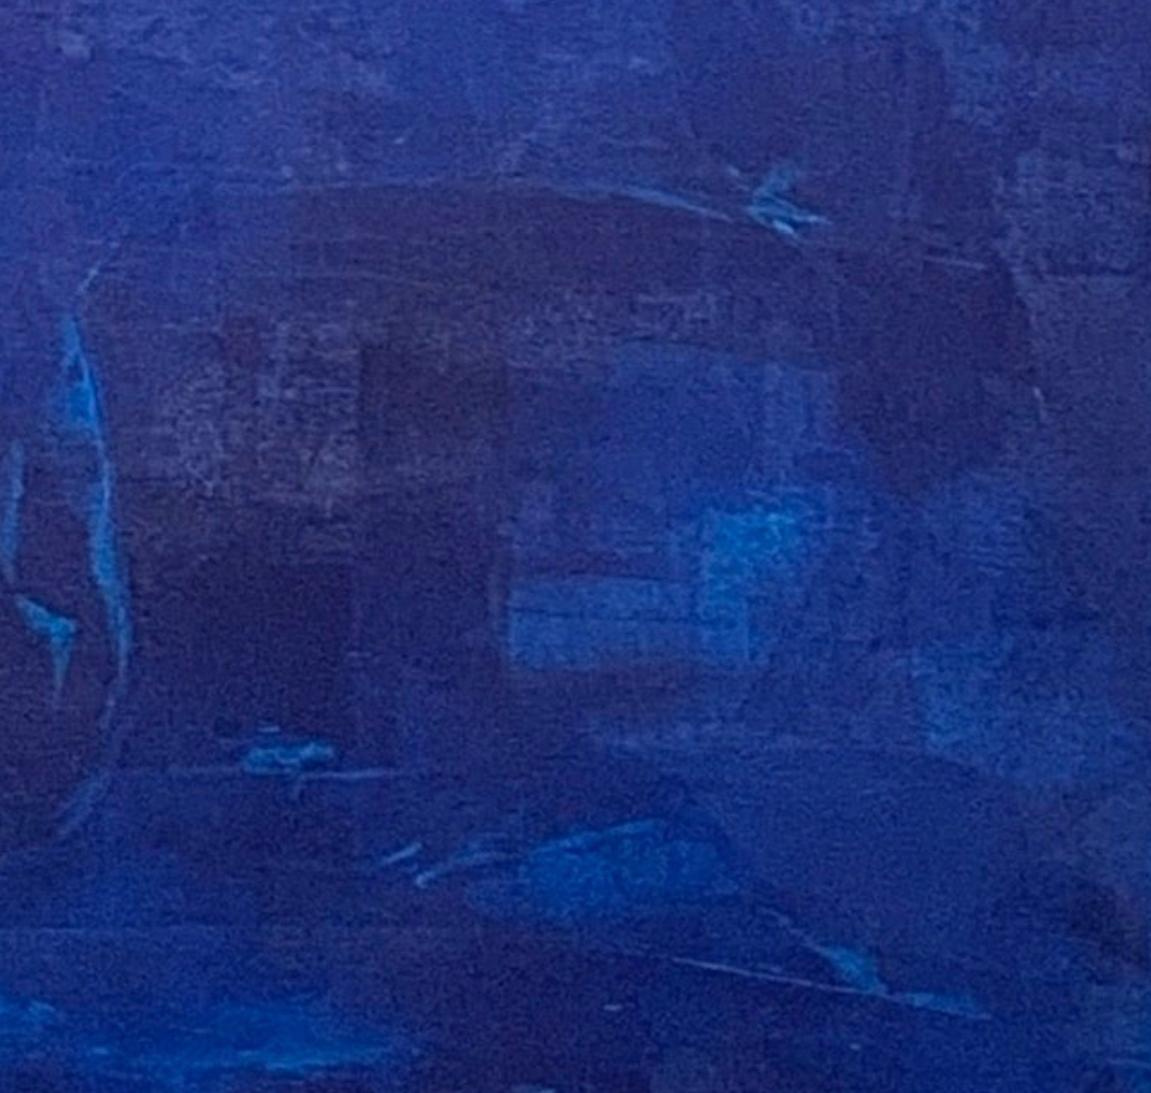 La mer profonde, océan contemporain, bleu foncé, essence de l'océan, art de Floride en vente 2